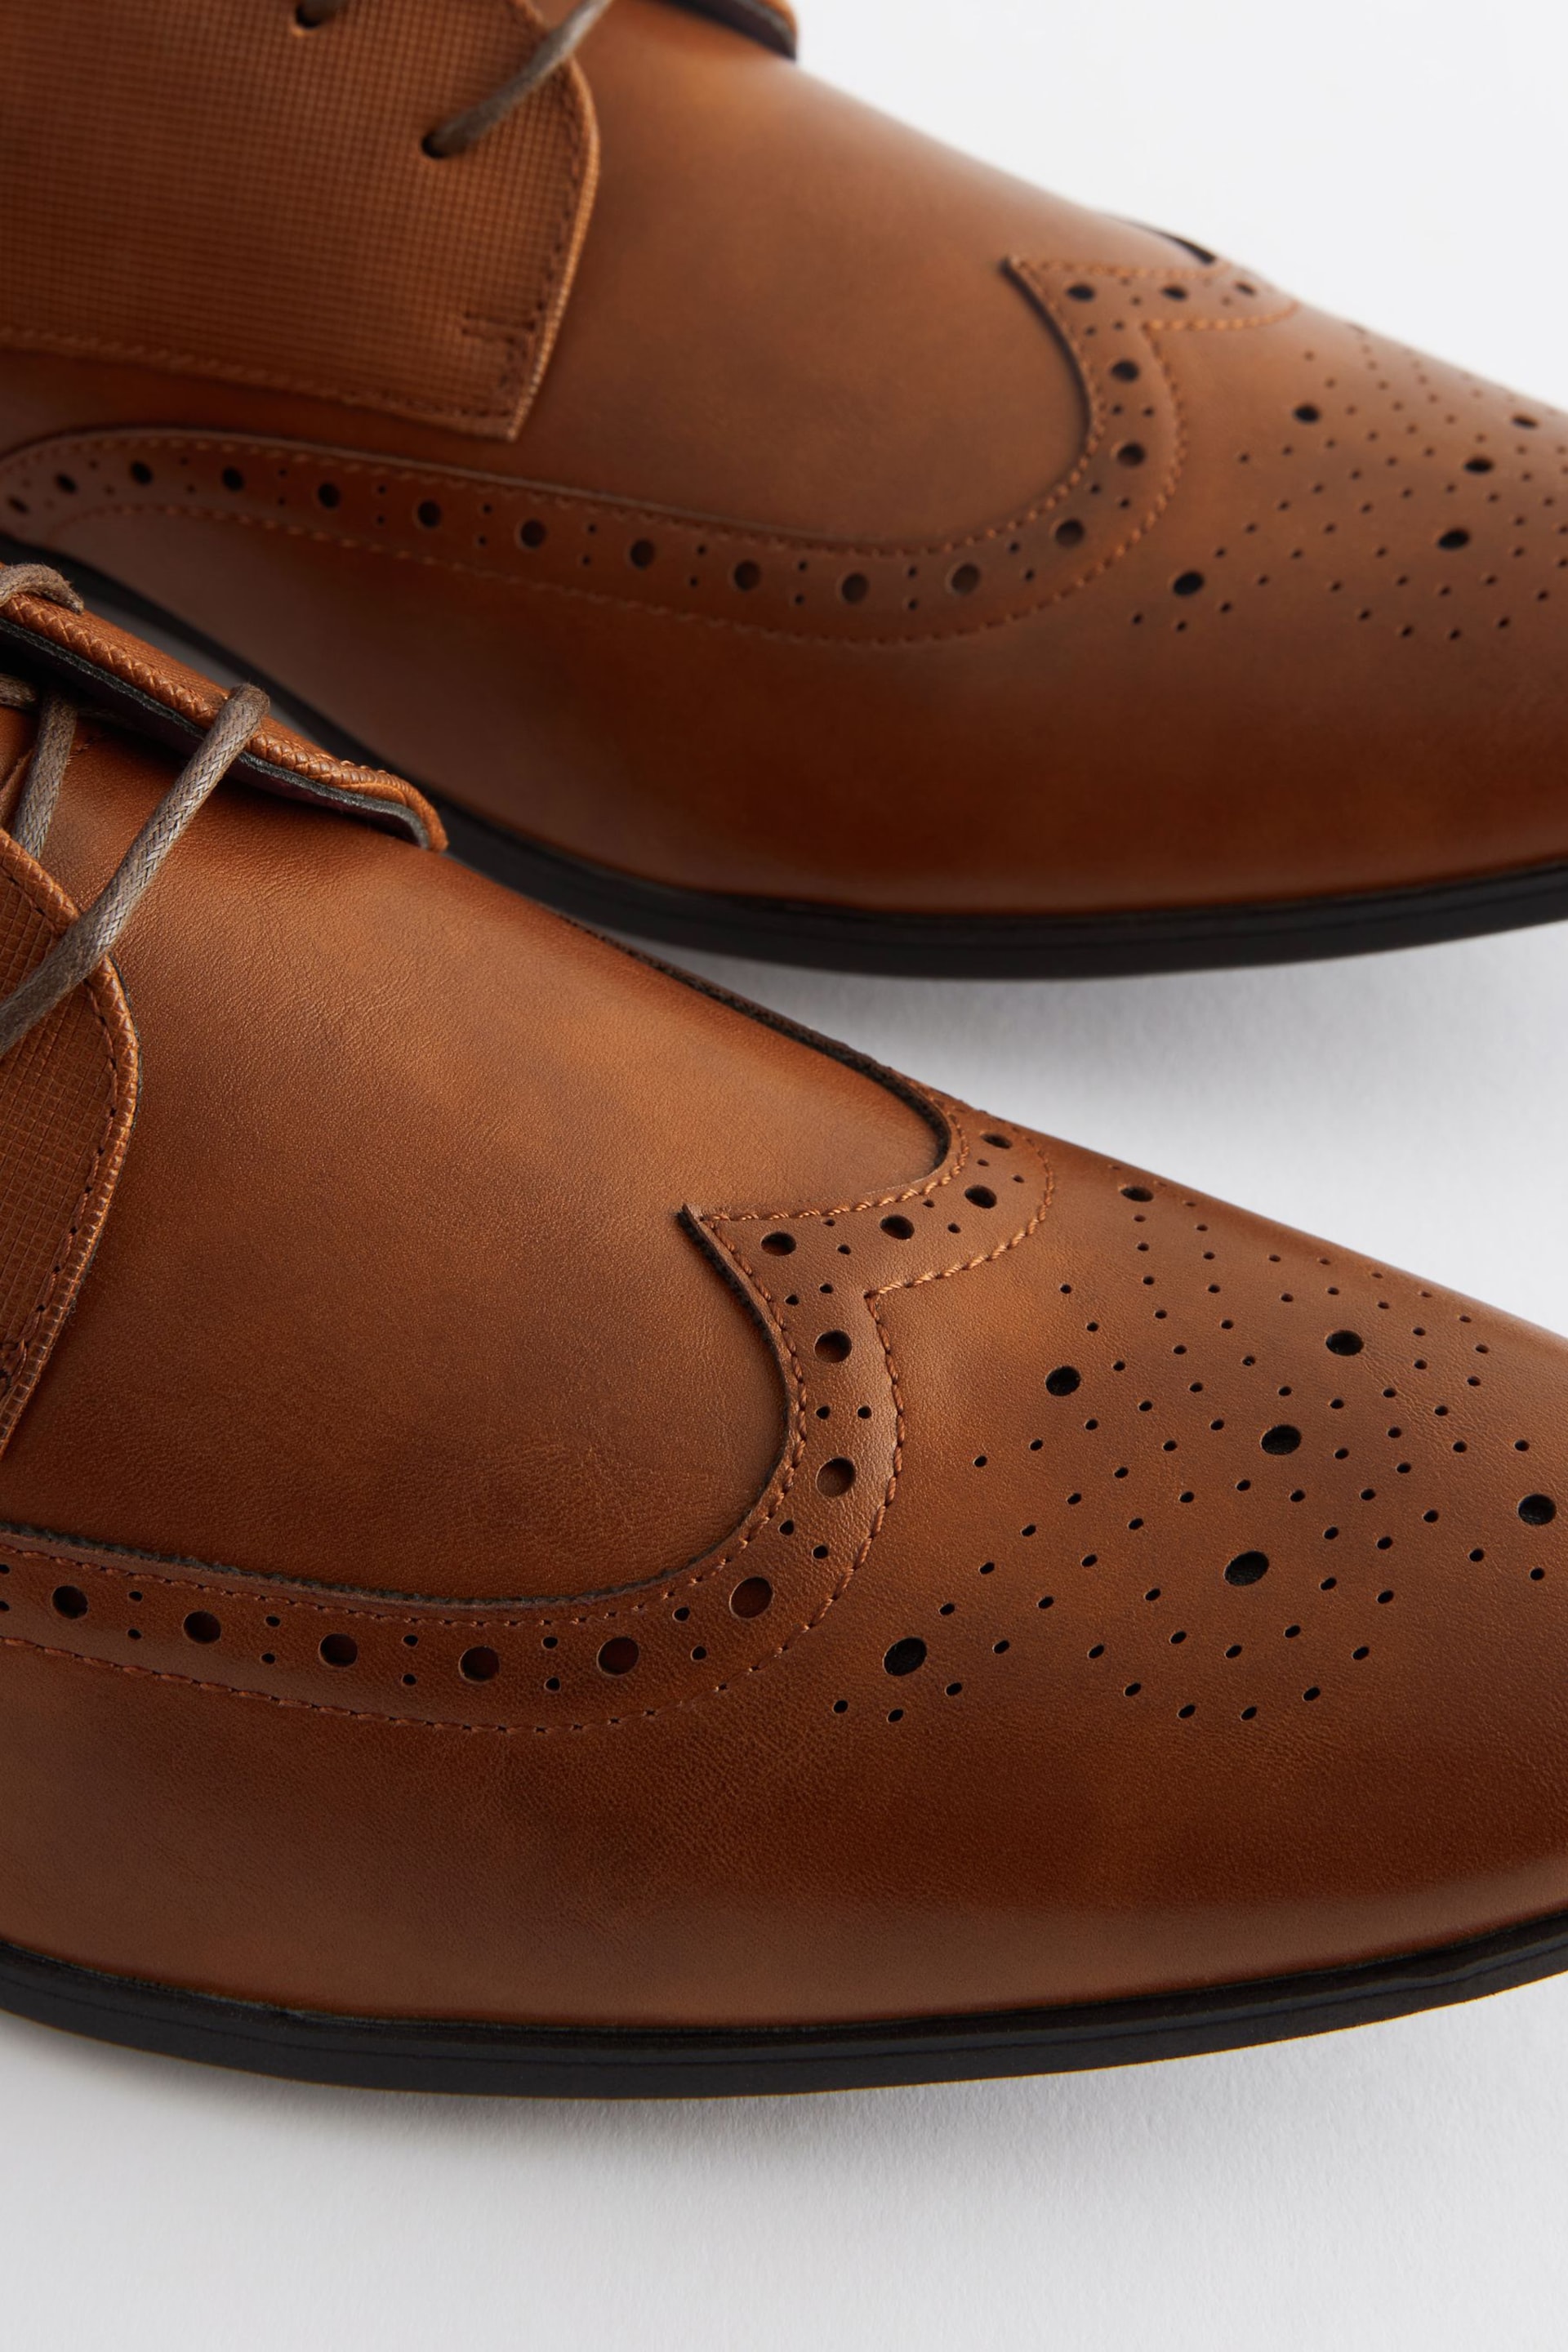 Tan Brown Brogue Shoes - Image 4 of 6